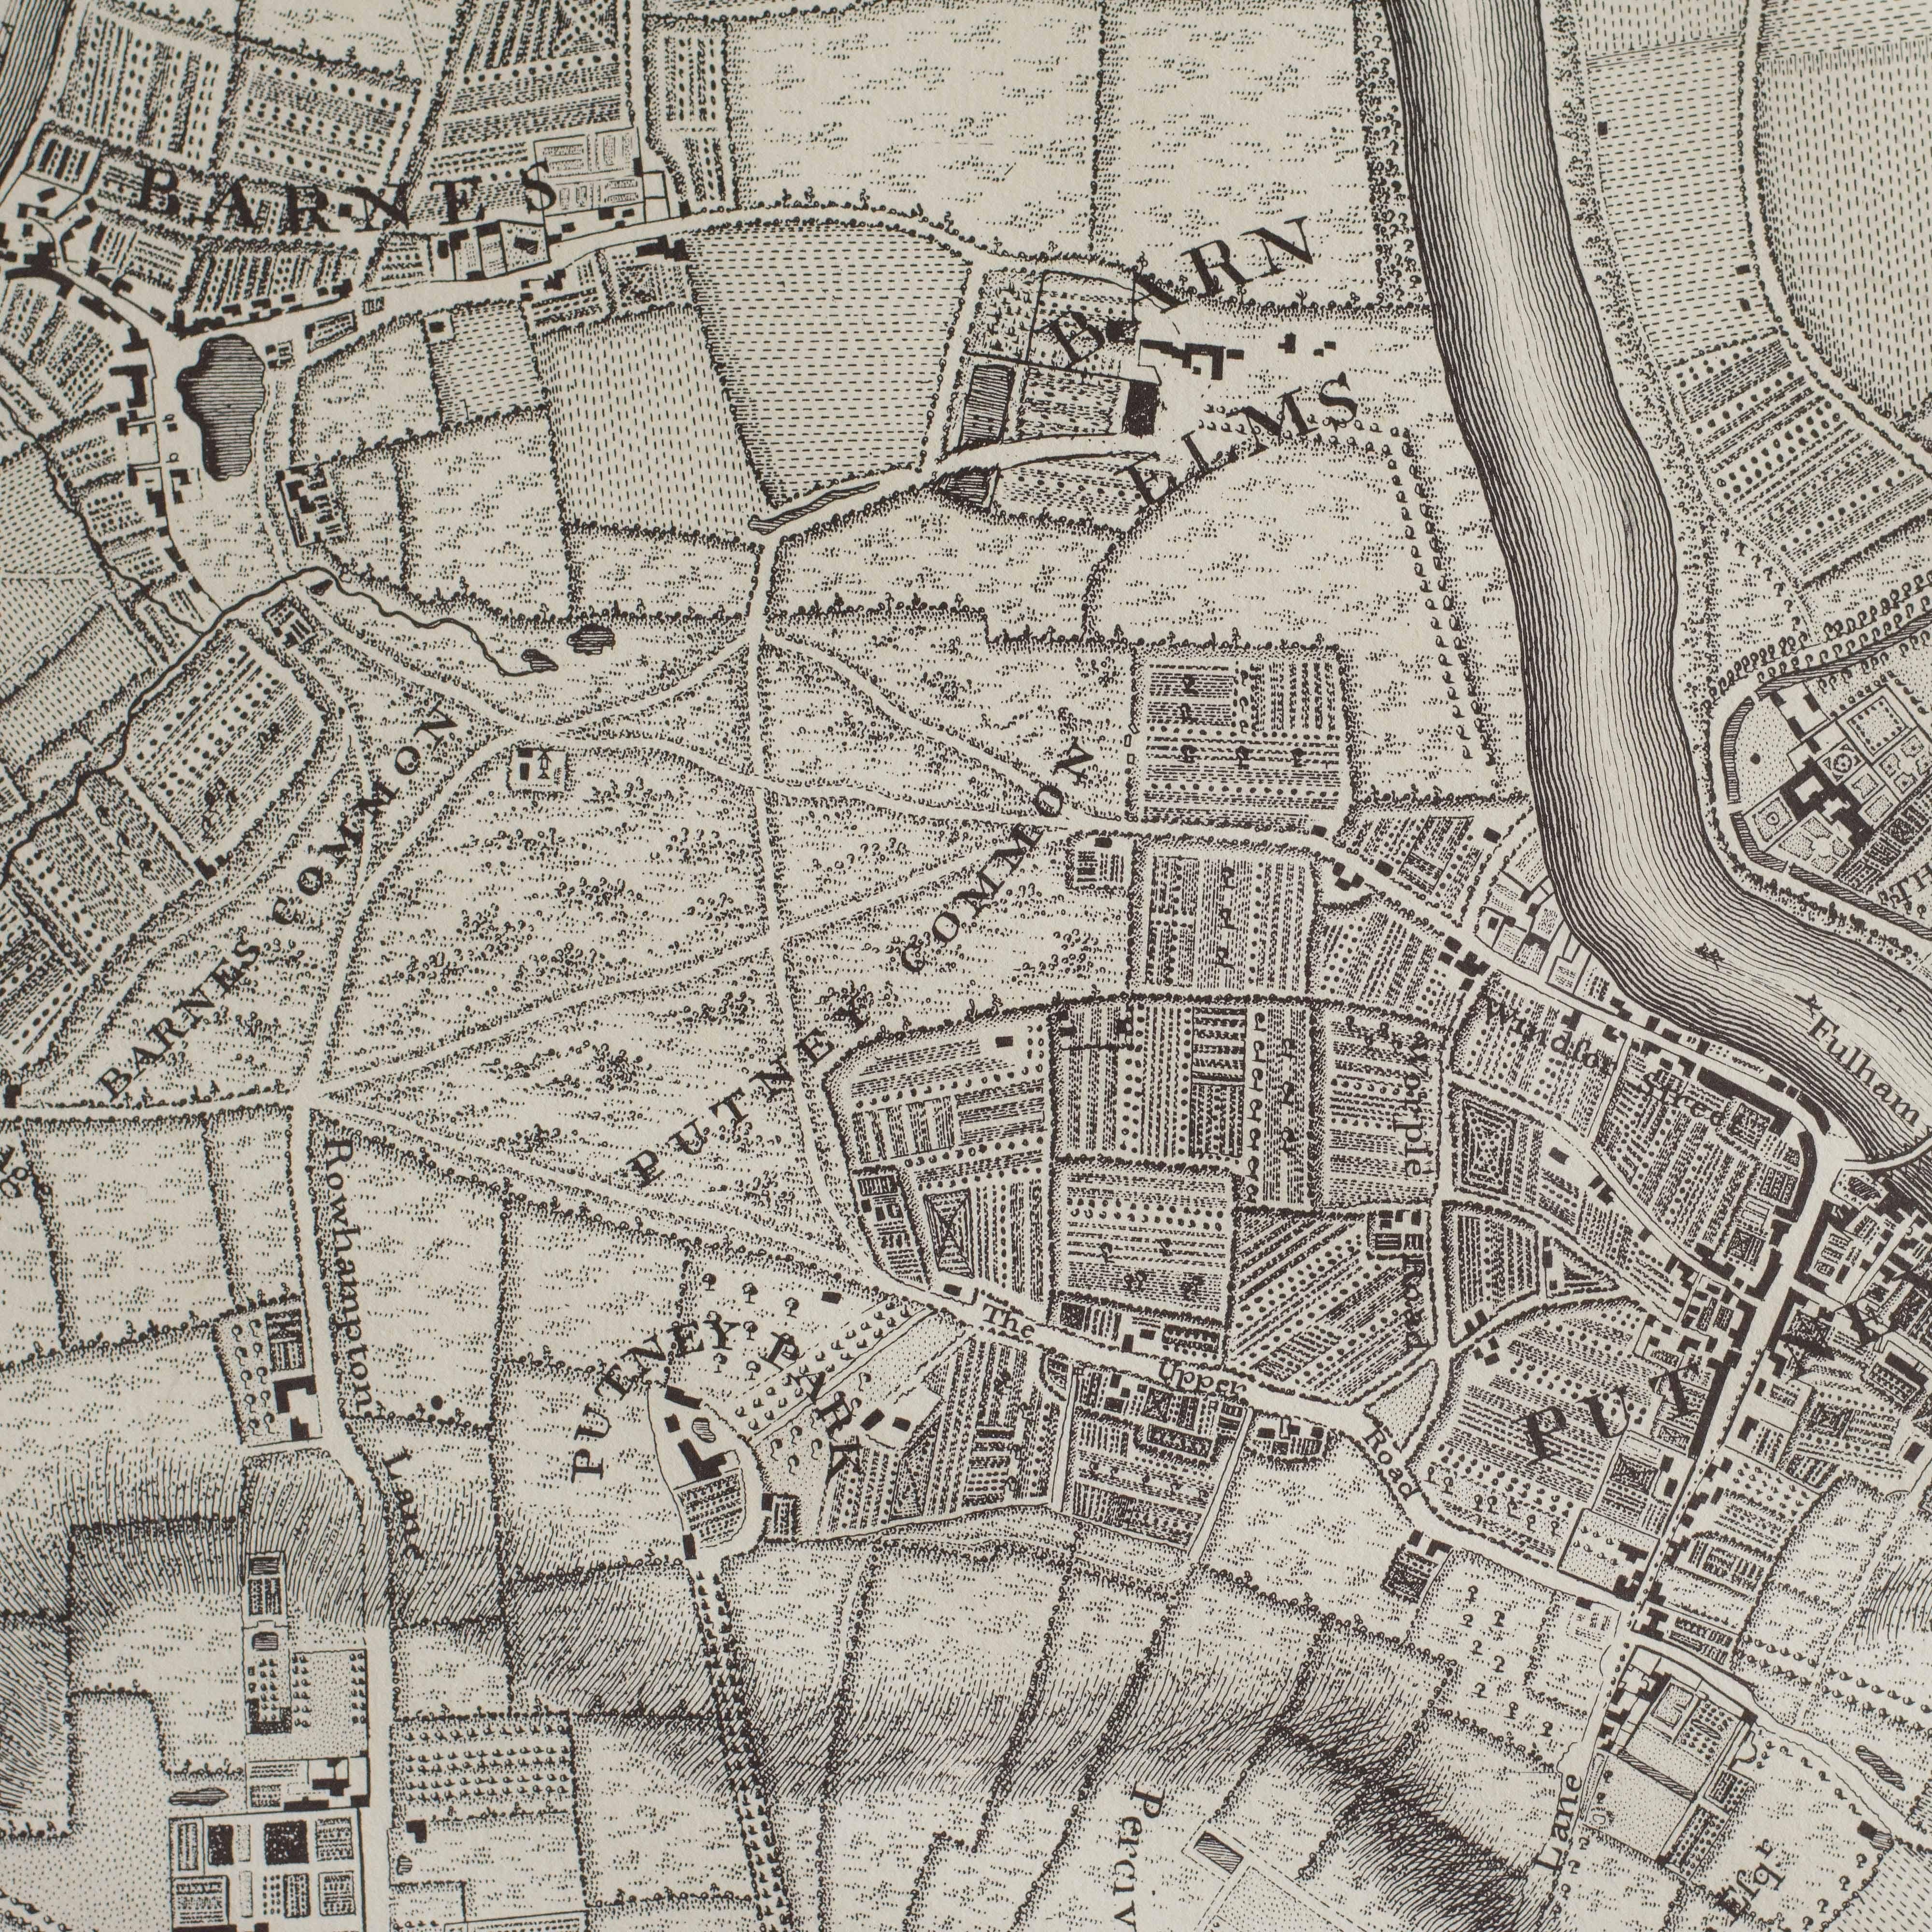 john rocque's map of london